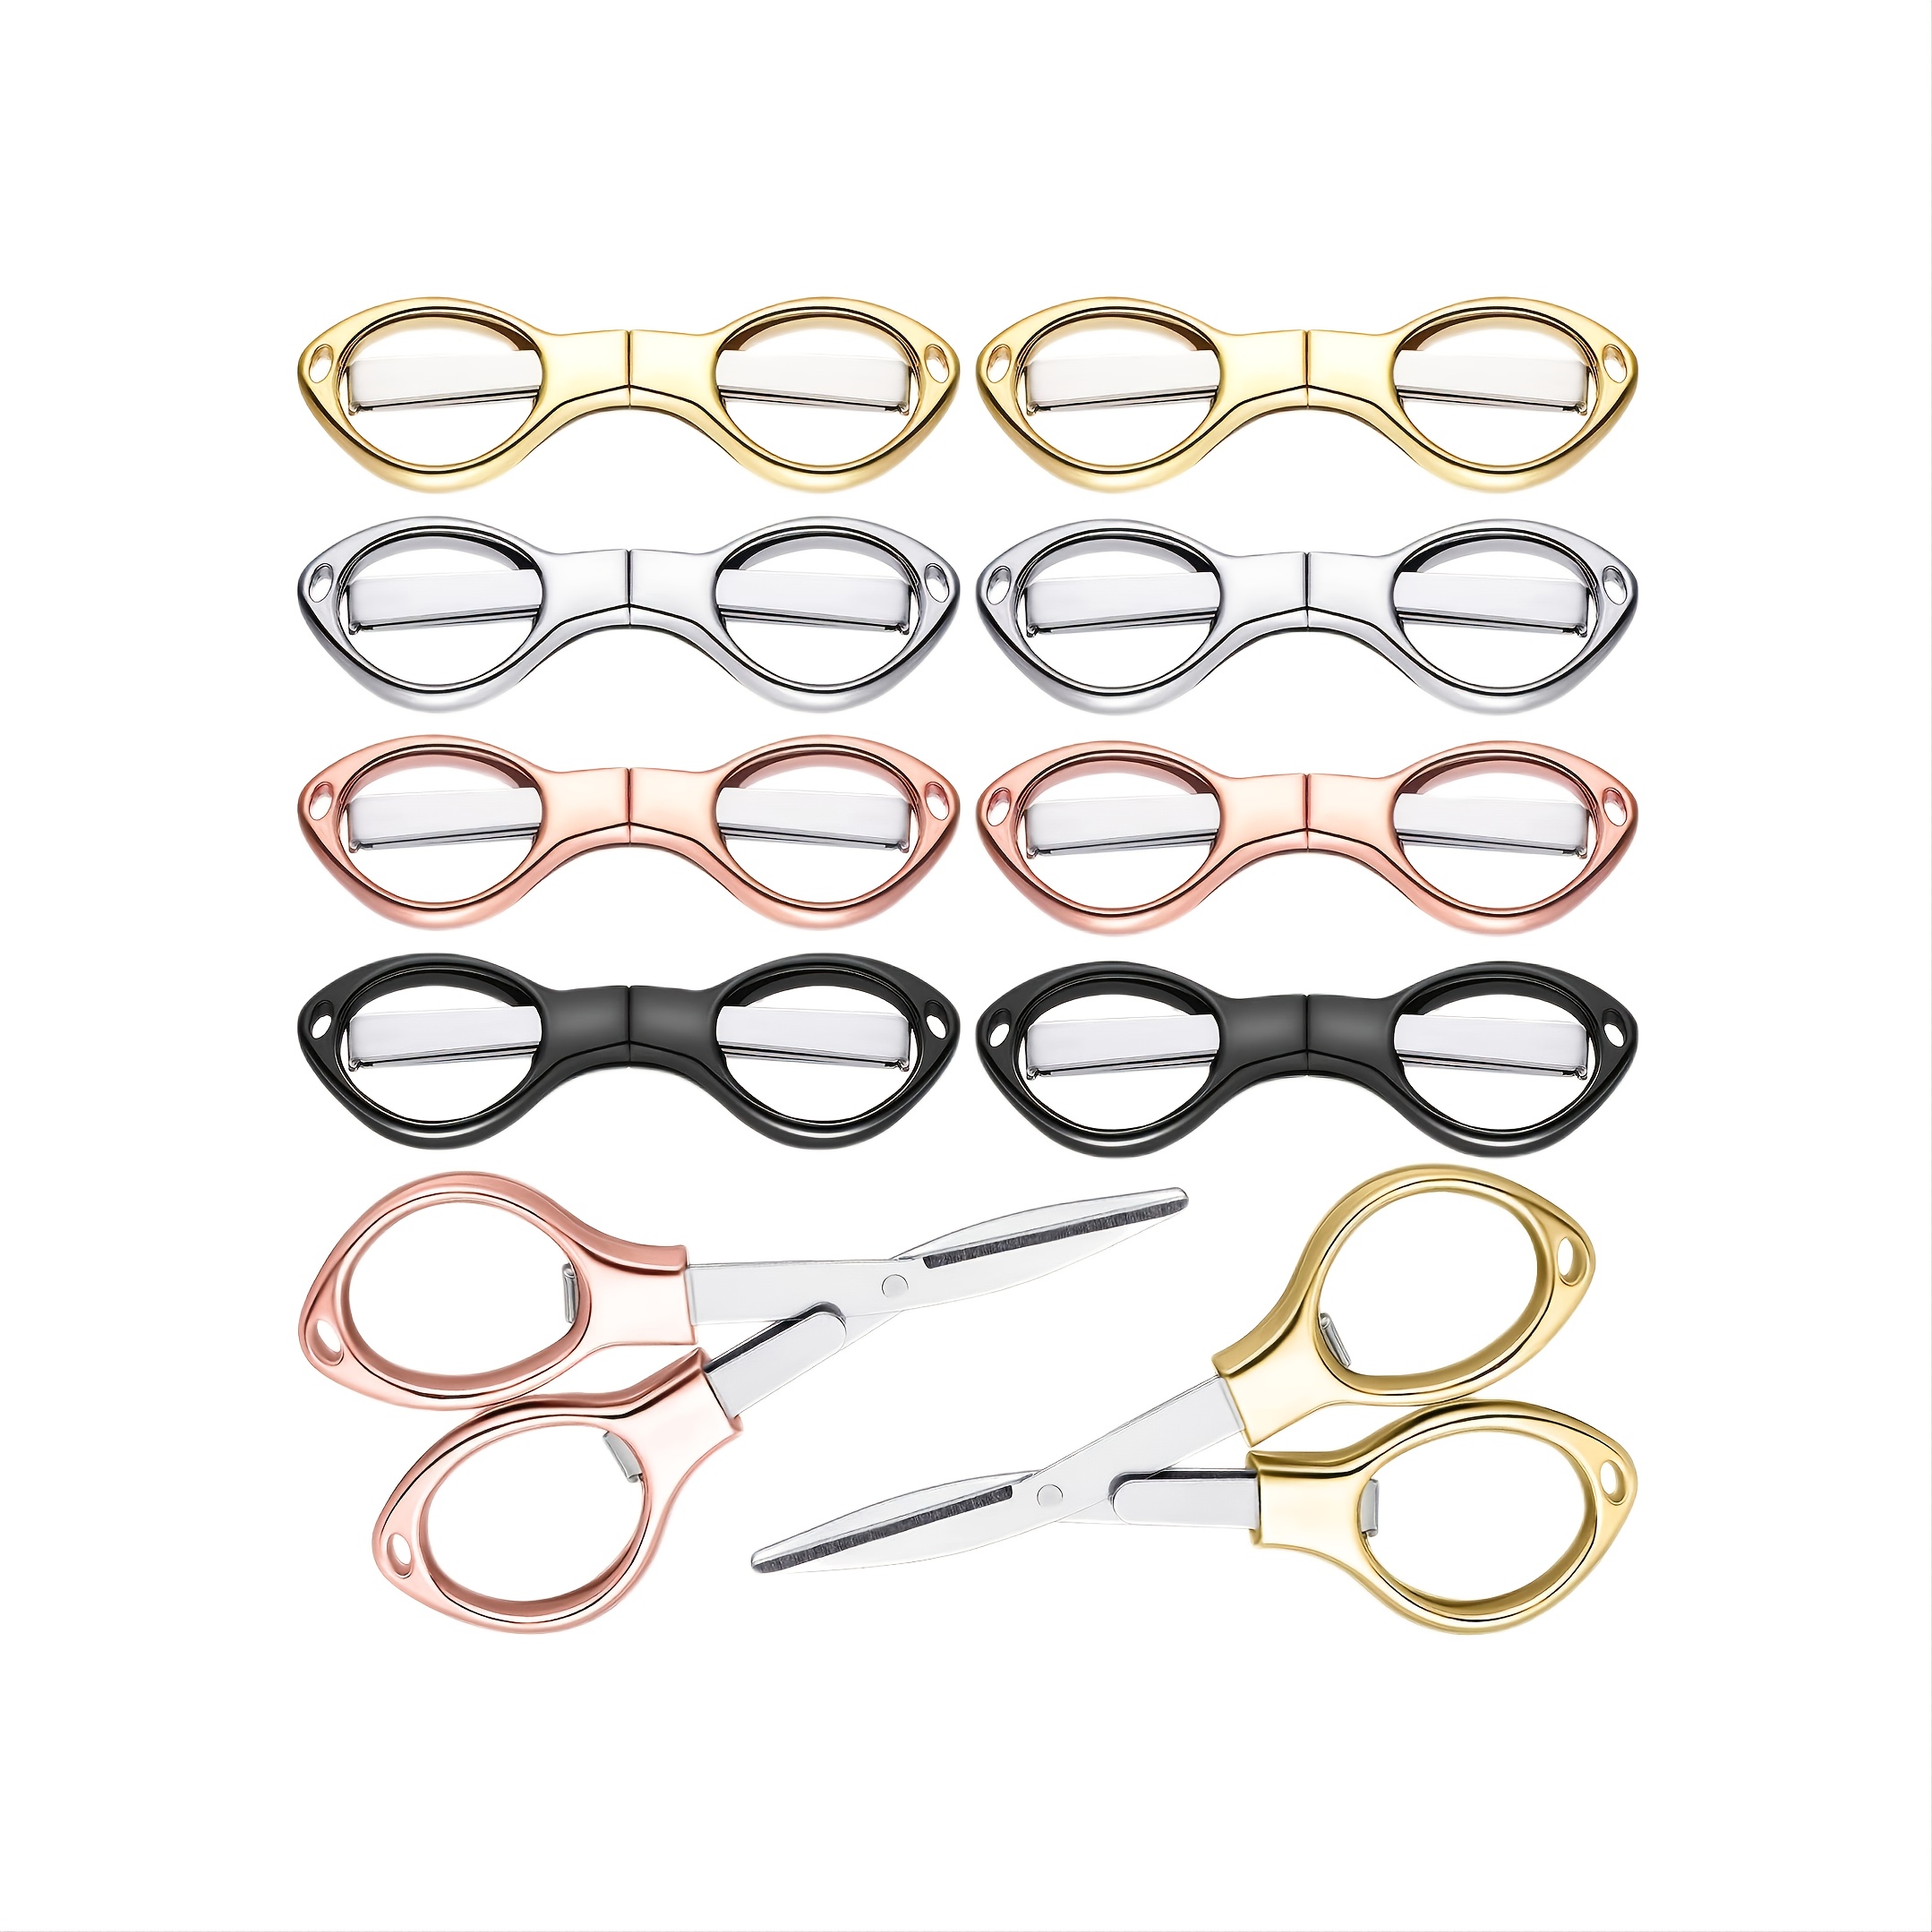  Stainless Steel Pocket Travel Folding Scissors Keychain Fishing  Scissors Thread Cutter : Arts, Crafts & Sewing